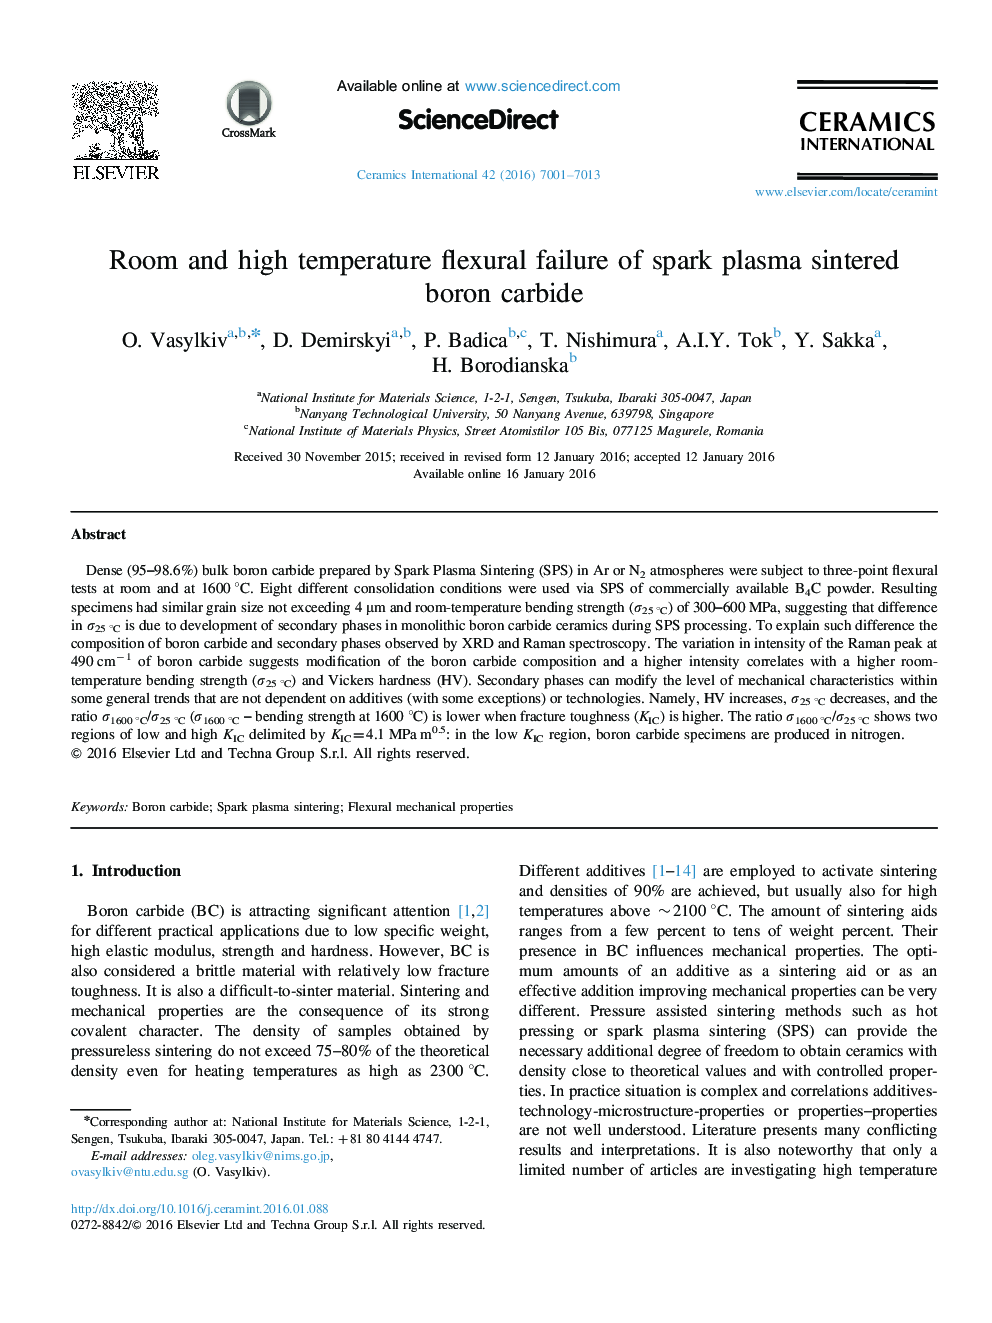 Room and high temperature flexural failure of spark plasma sintered boron carbide